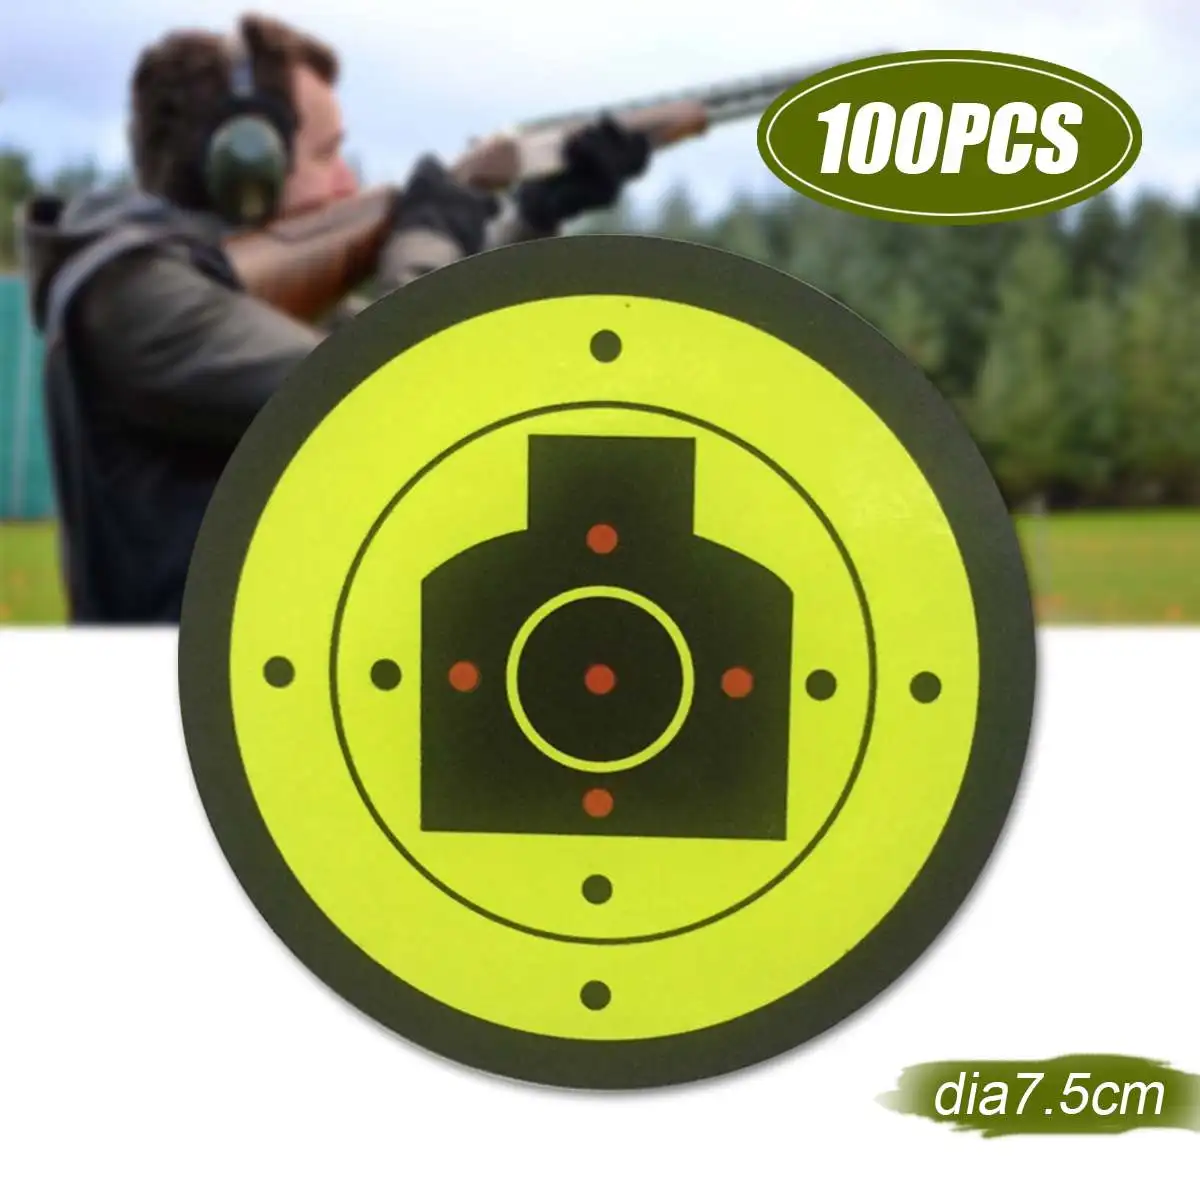 

100Pcs Stick Splatter Reactive Target Sticker Self Adhesive Shooting Targets For Fluorescent Hunting Guns Target Paper Dia 7.5cm